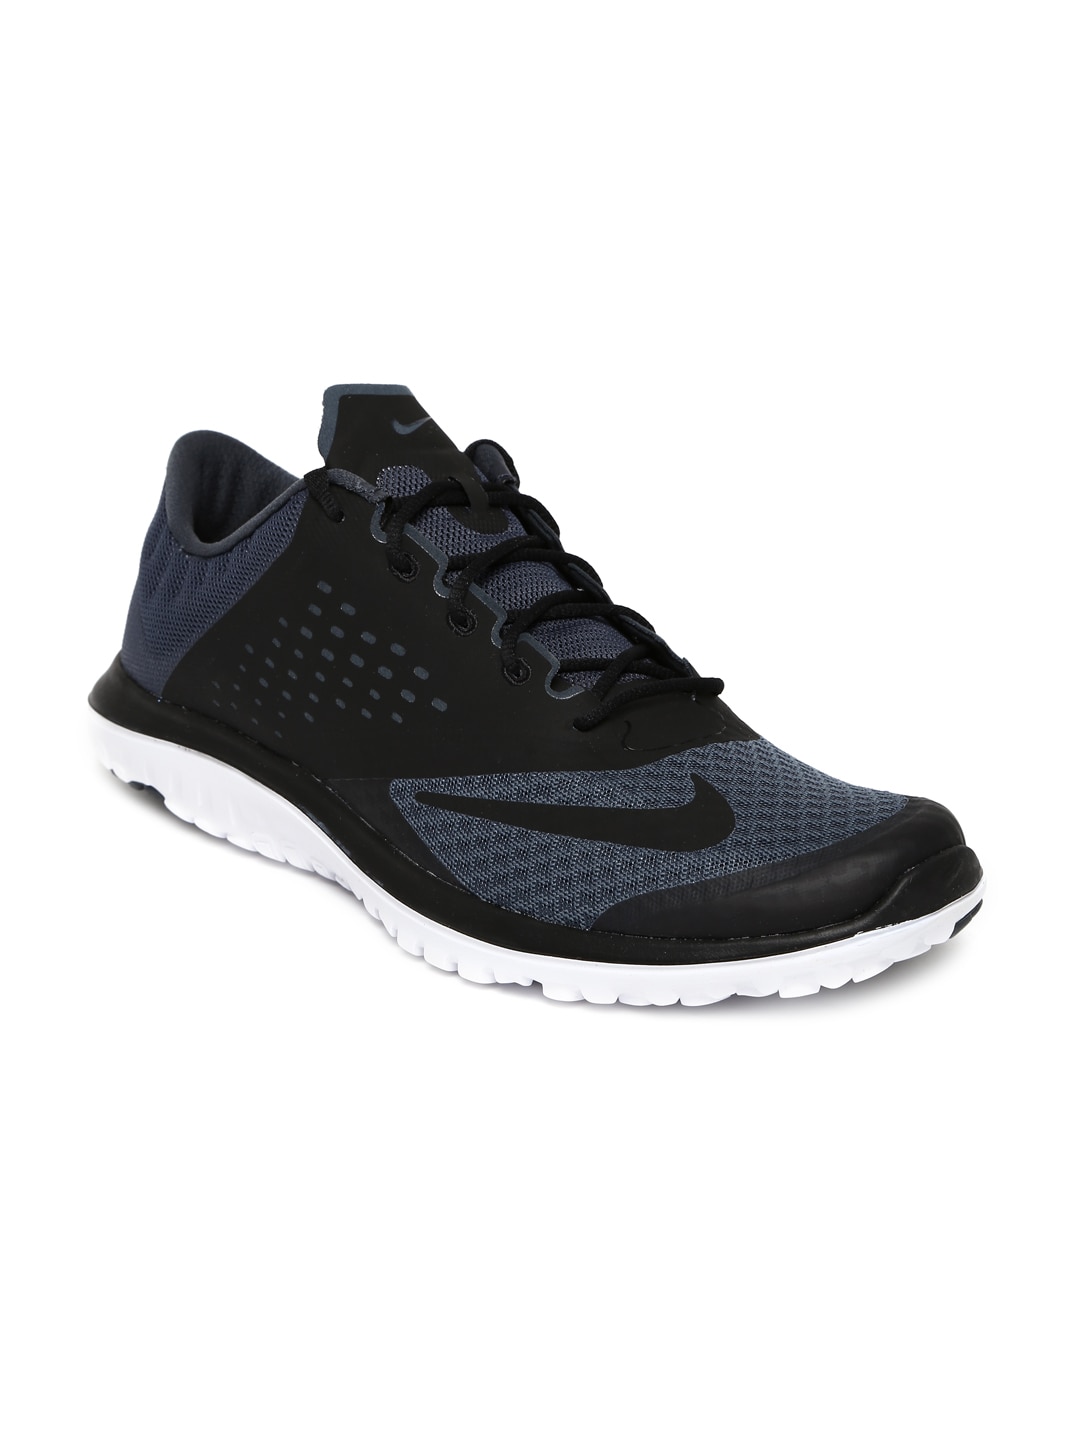 Buy Nike Men Grey & Black FS Lite Run 2 Running Shoes - 634 - Footwear ...